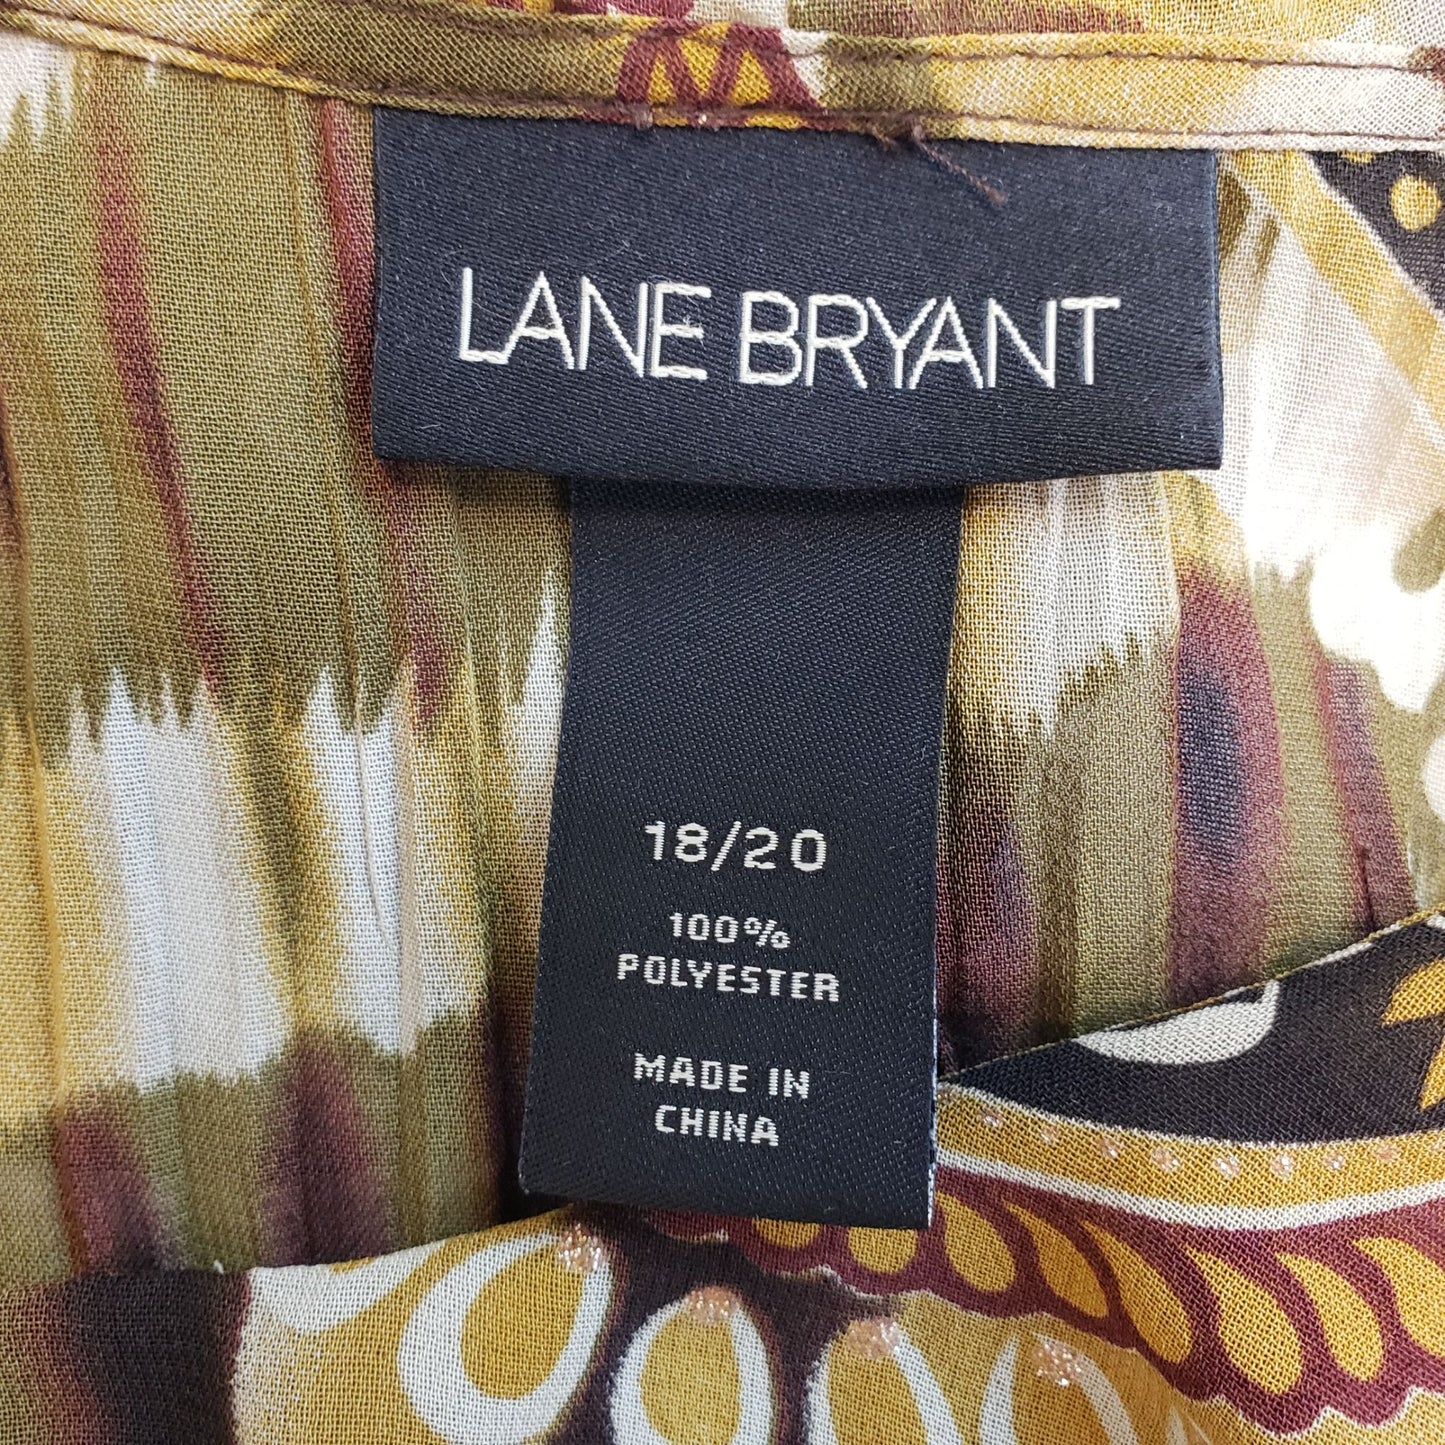 Lane Bryant Pleated Paisley Mixed Print Blouse Size 18/20